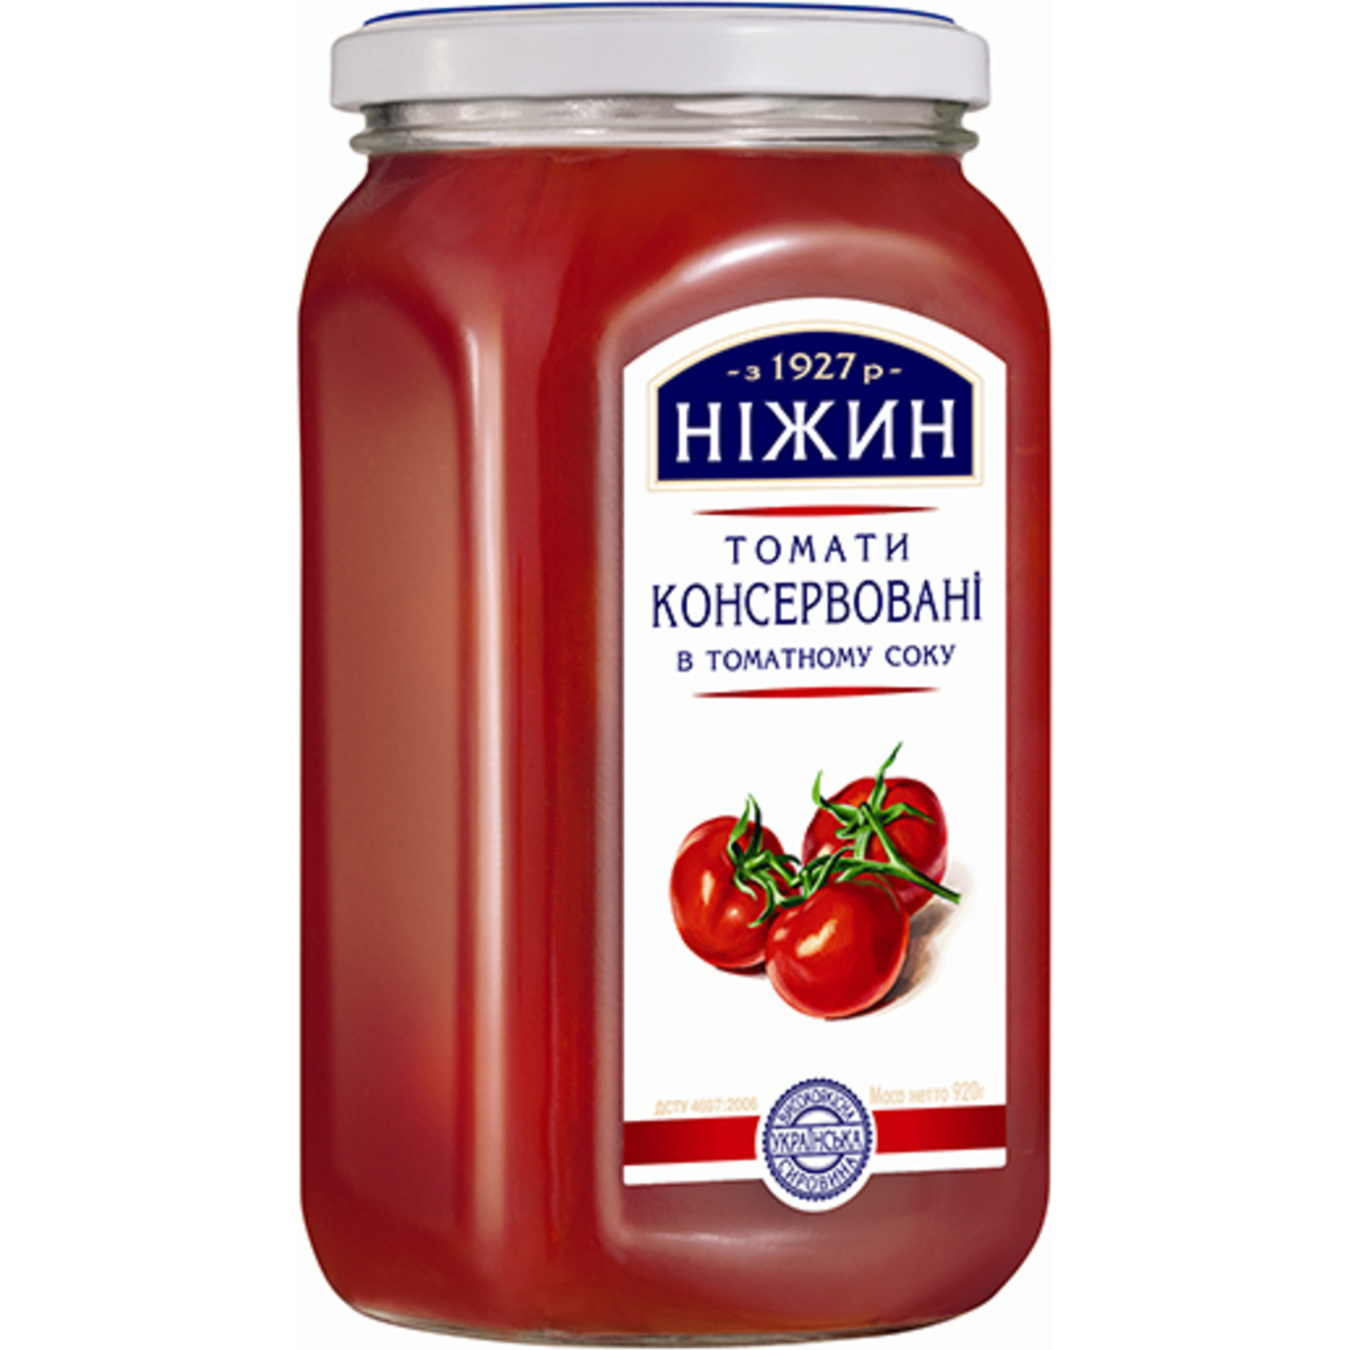 Nizhyn Pickled Tomato Sauce Tomato